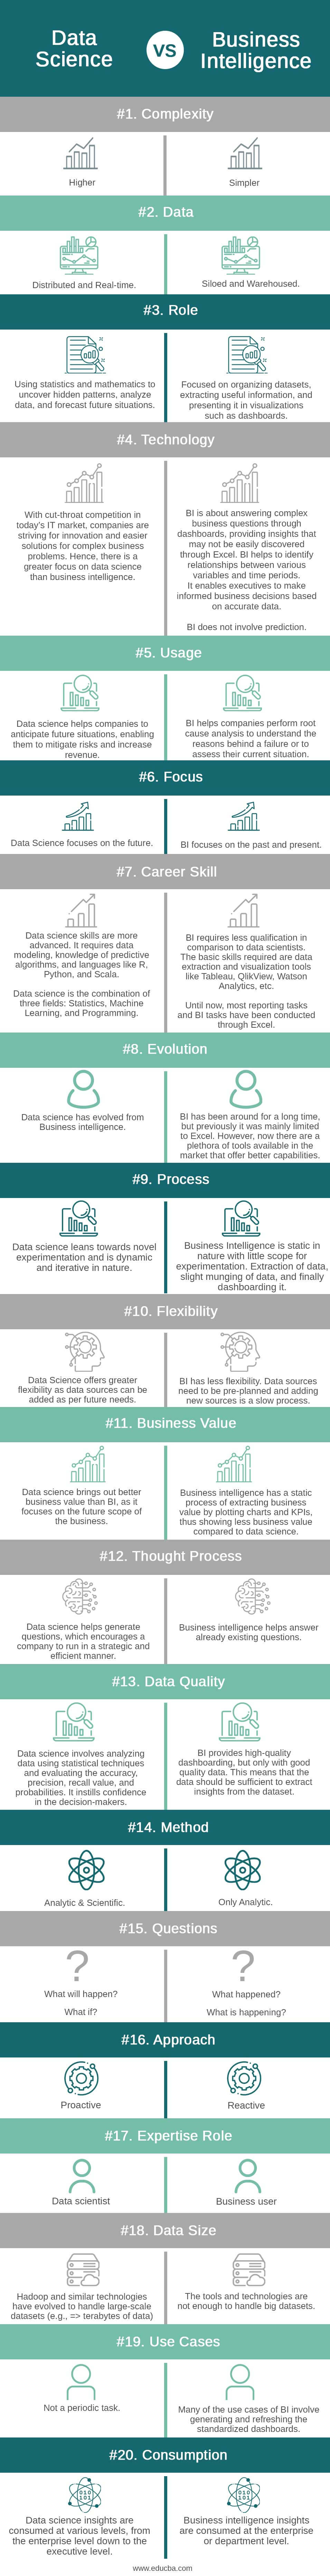 Data-Science-vs-Business-Intelligence-info